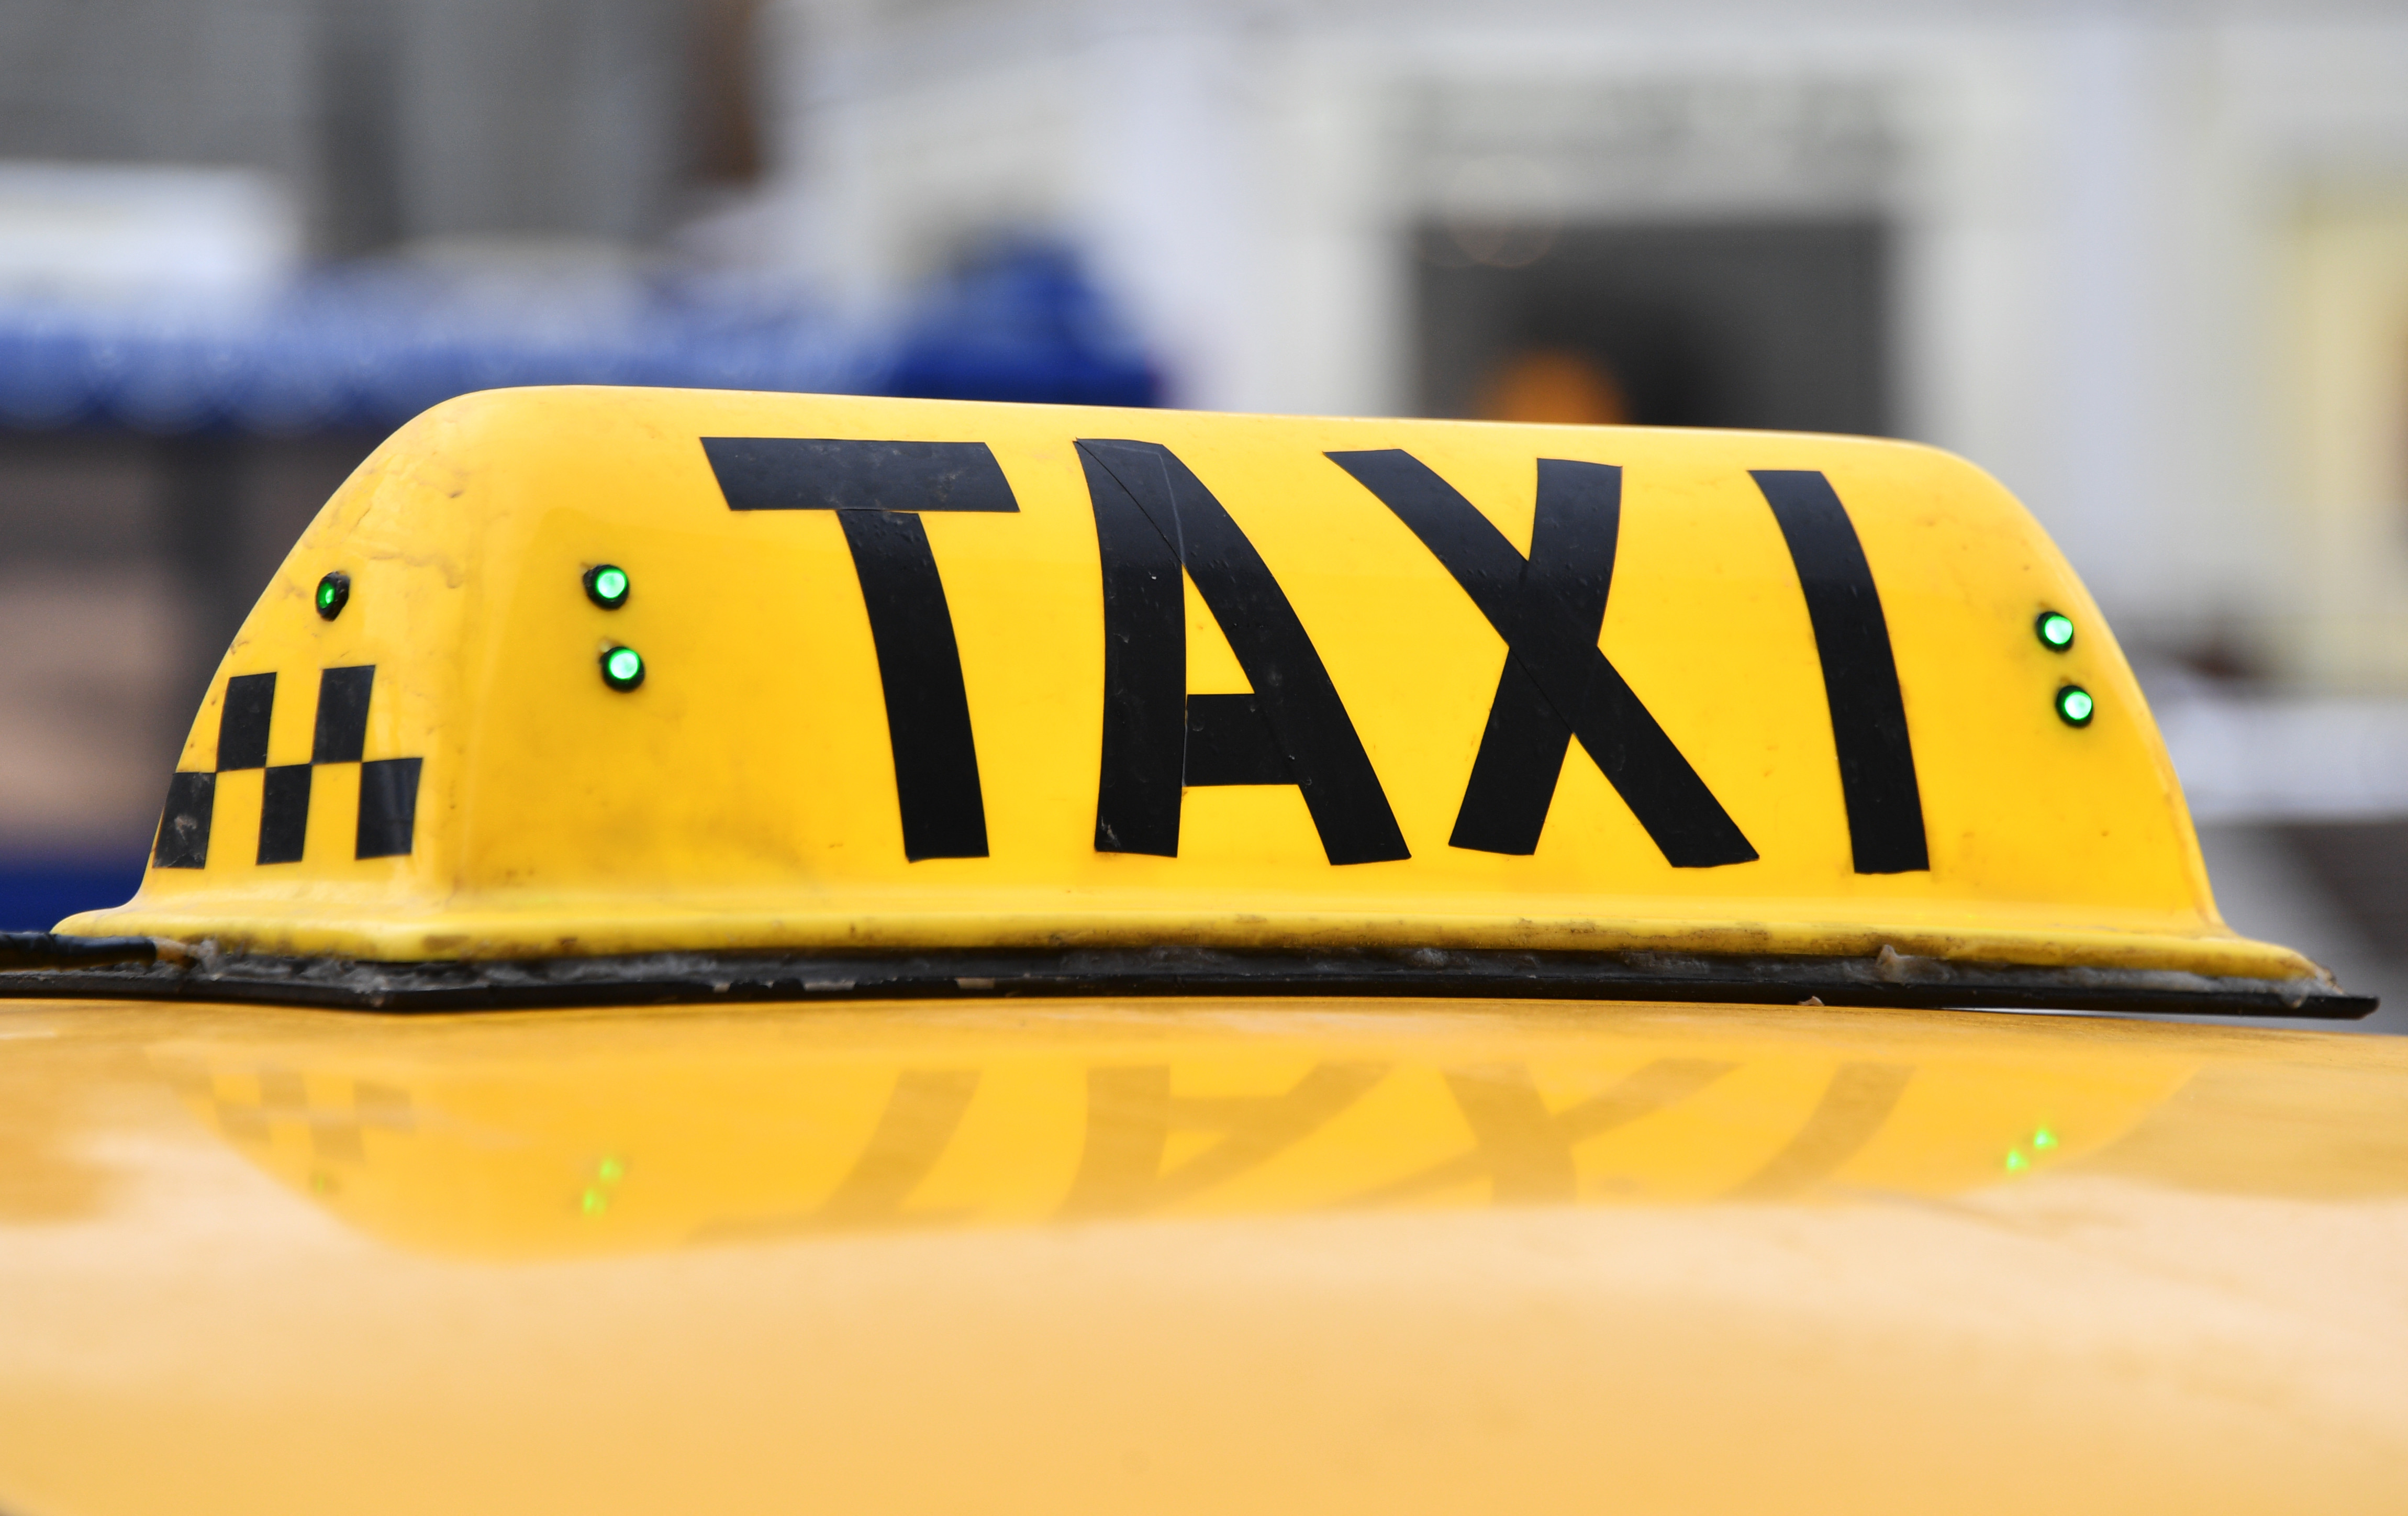 Ищу водителя такси. Машина "такси". Водитель такси. Такси машина картин. Такси картинки.